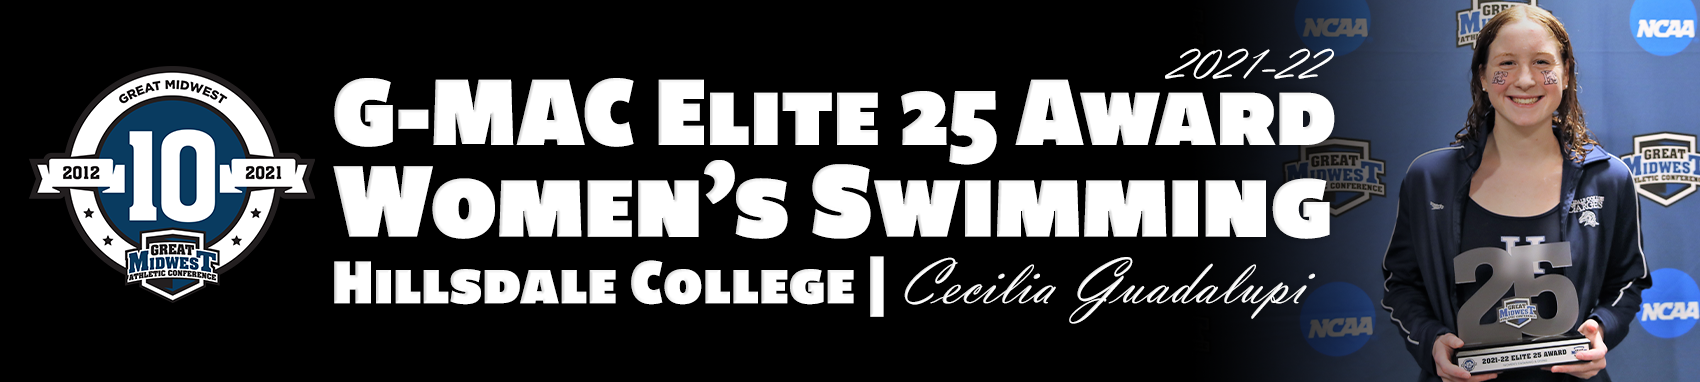 G-MAC Elite 25 - Women's Swimming Guadalupi